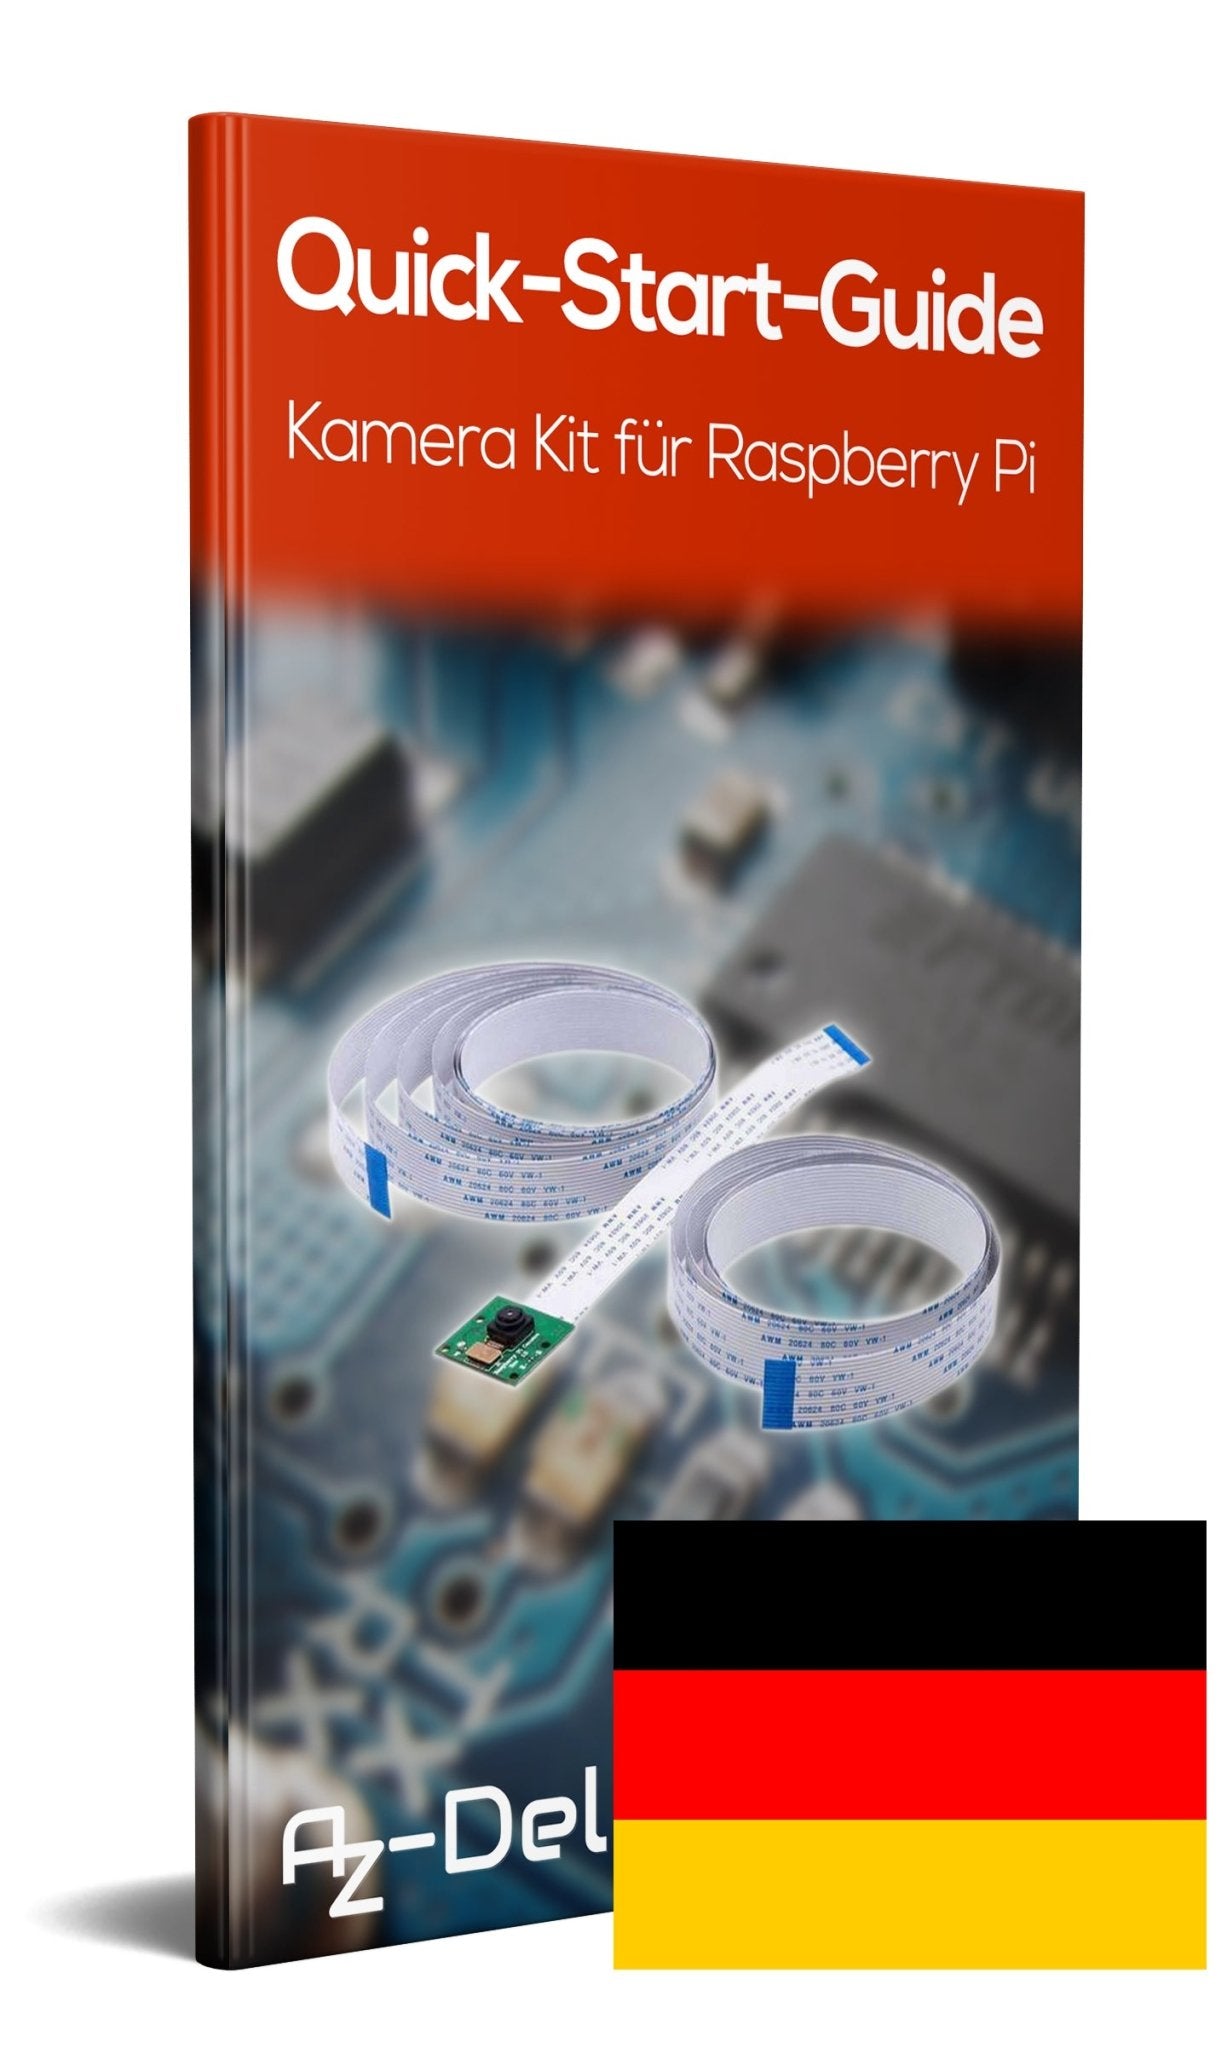 Kamera Kit für Raspberry Pi - AZ-Delivery